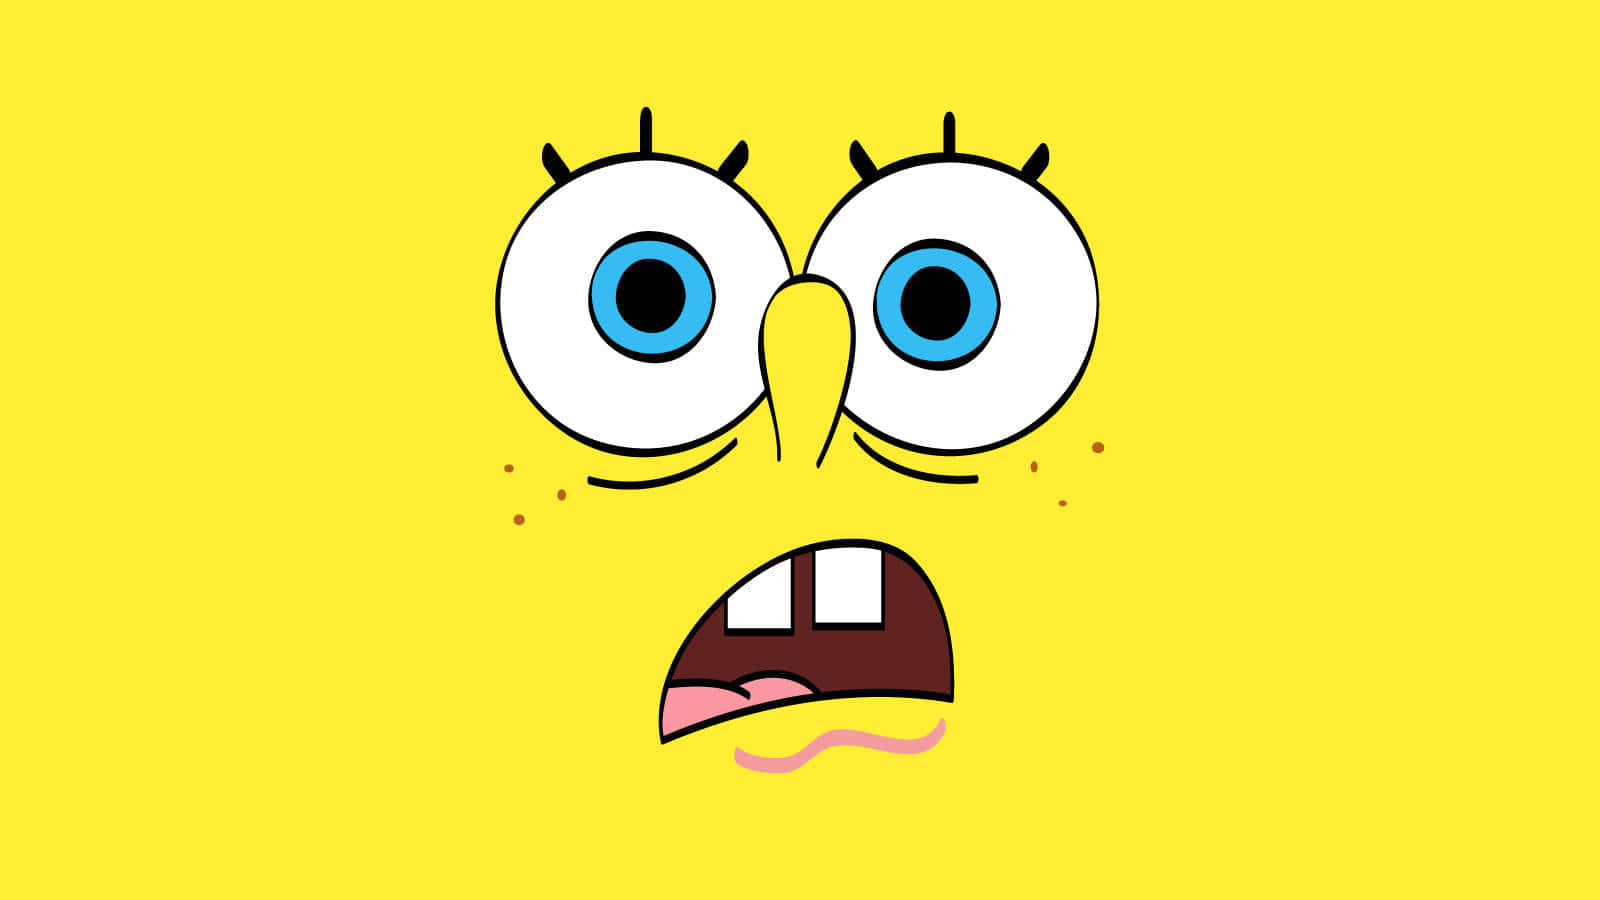 The iconic face of Spongebob Squarepants! Wallpaper